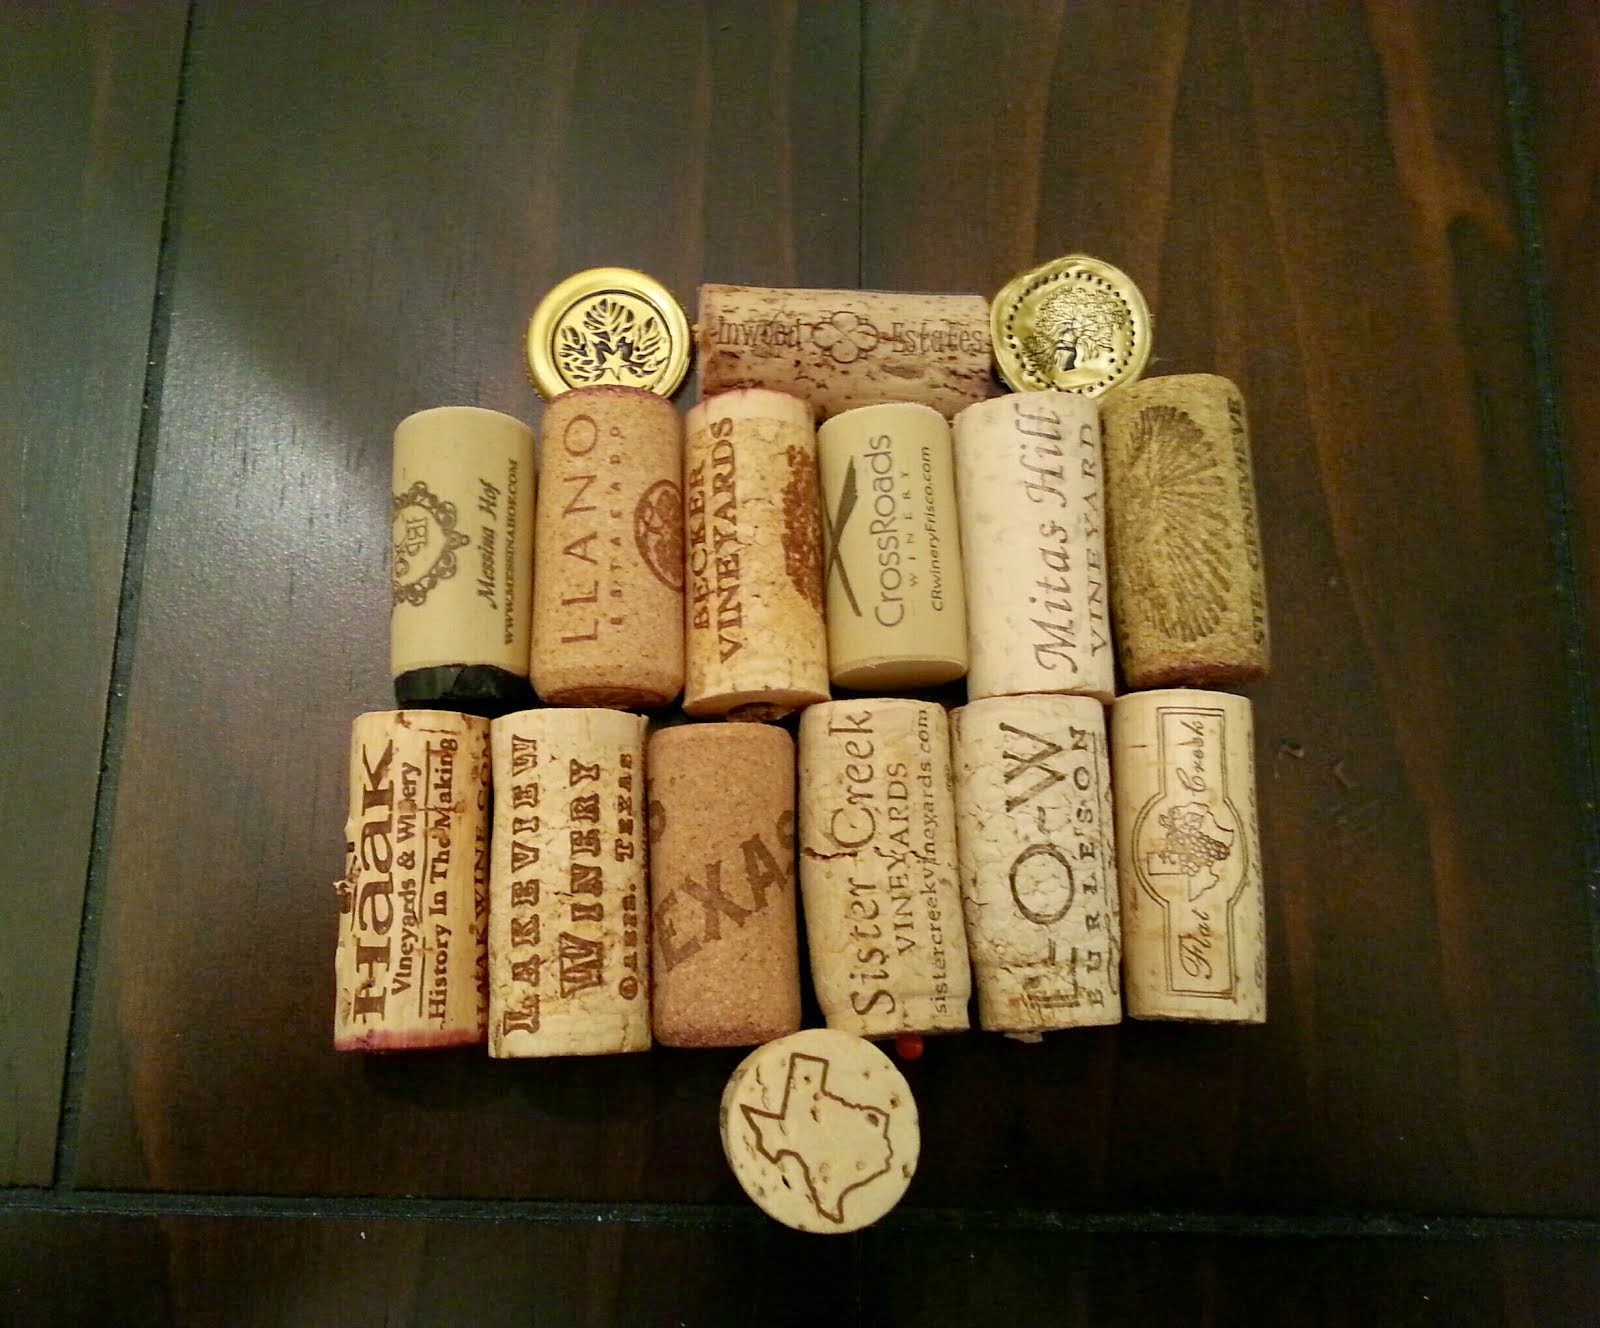 #TxWine corks